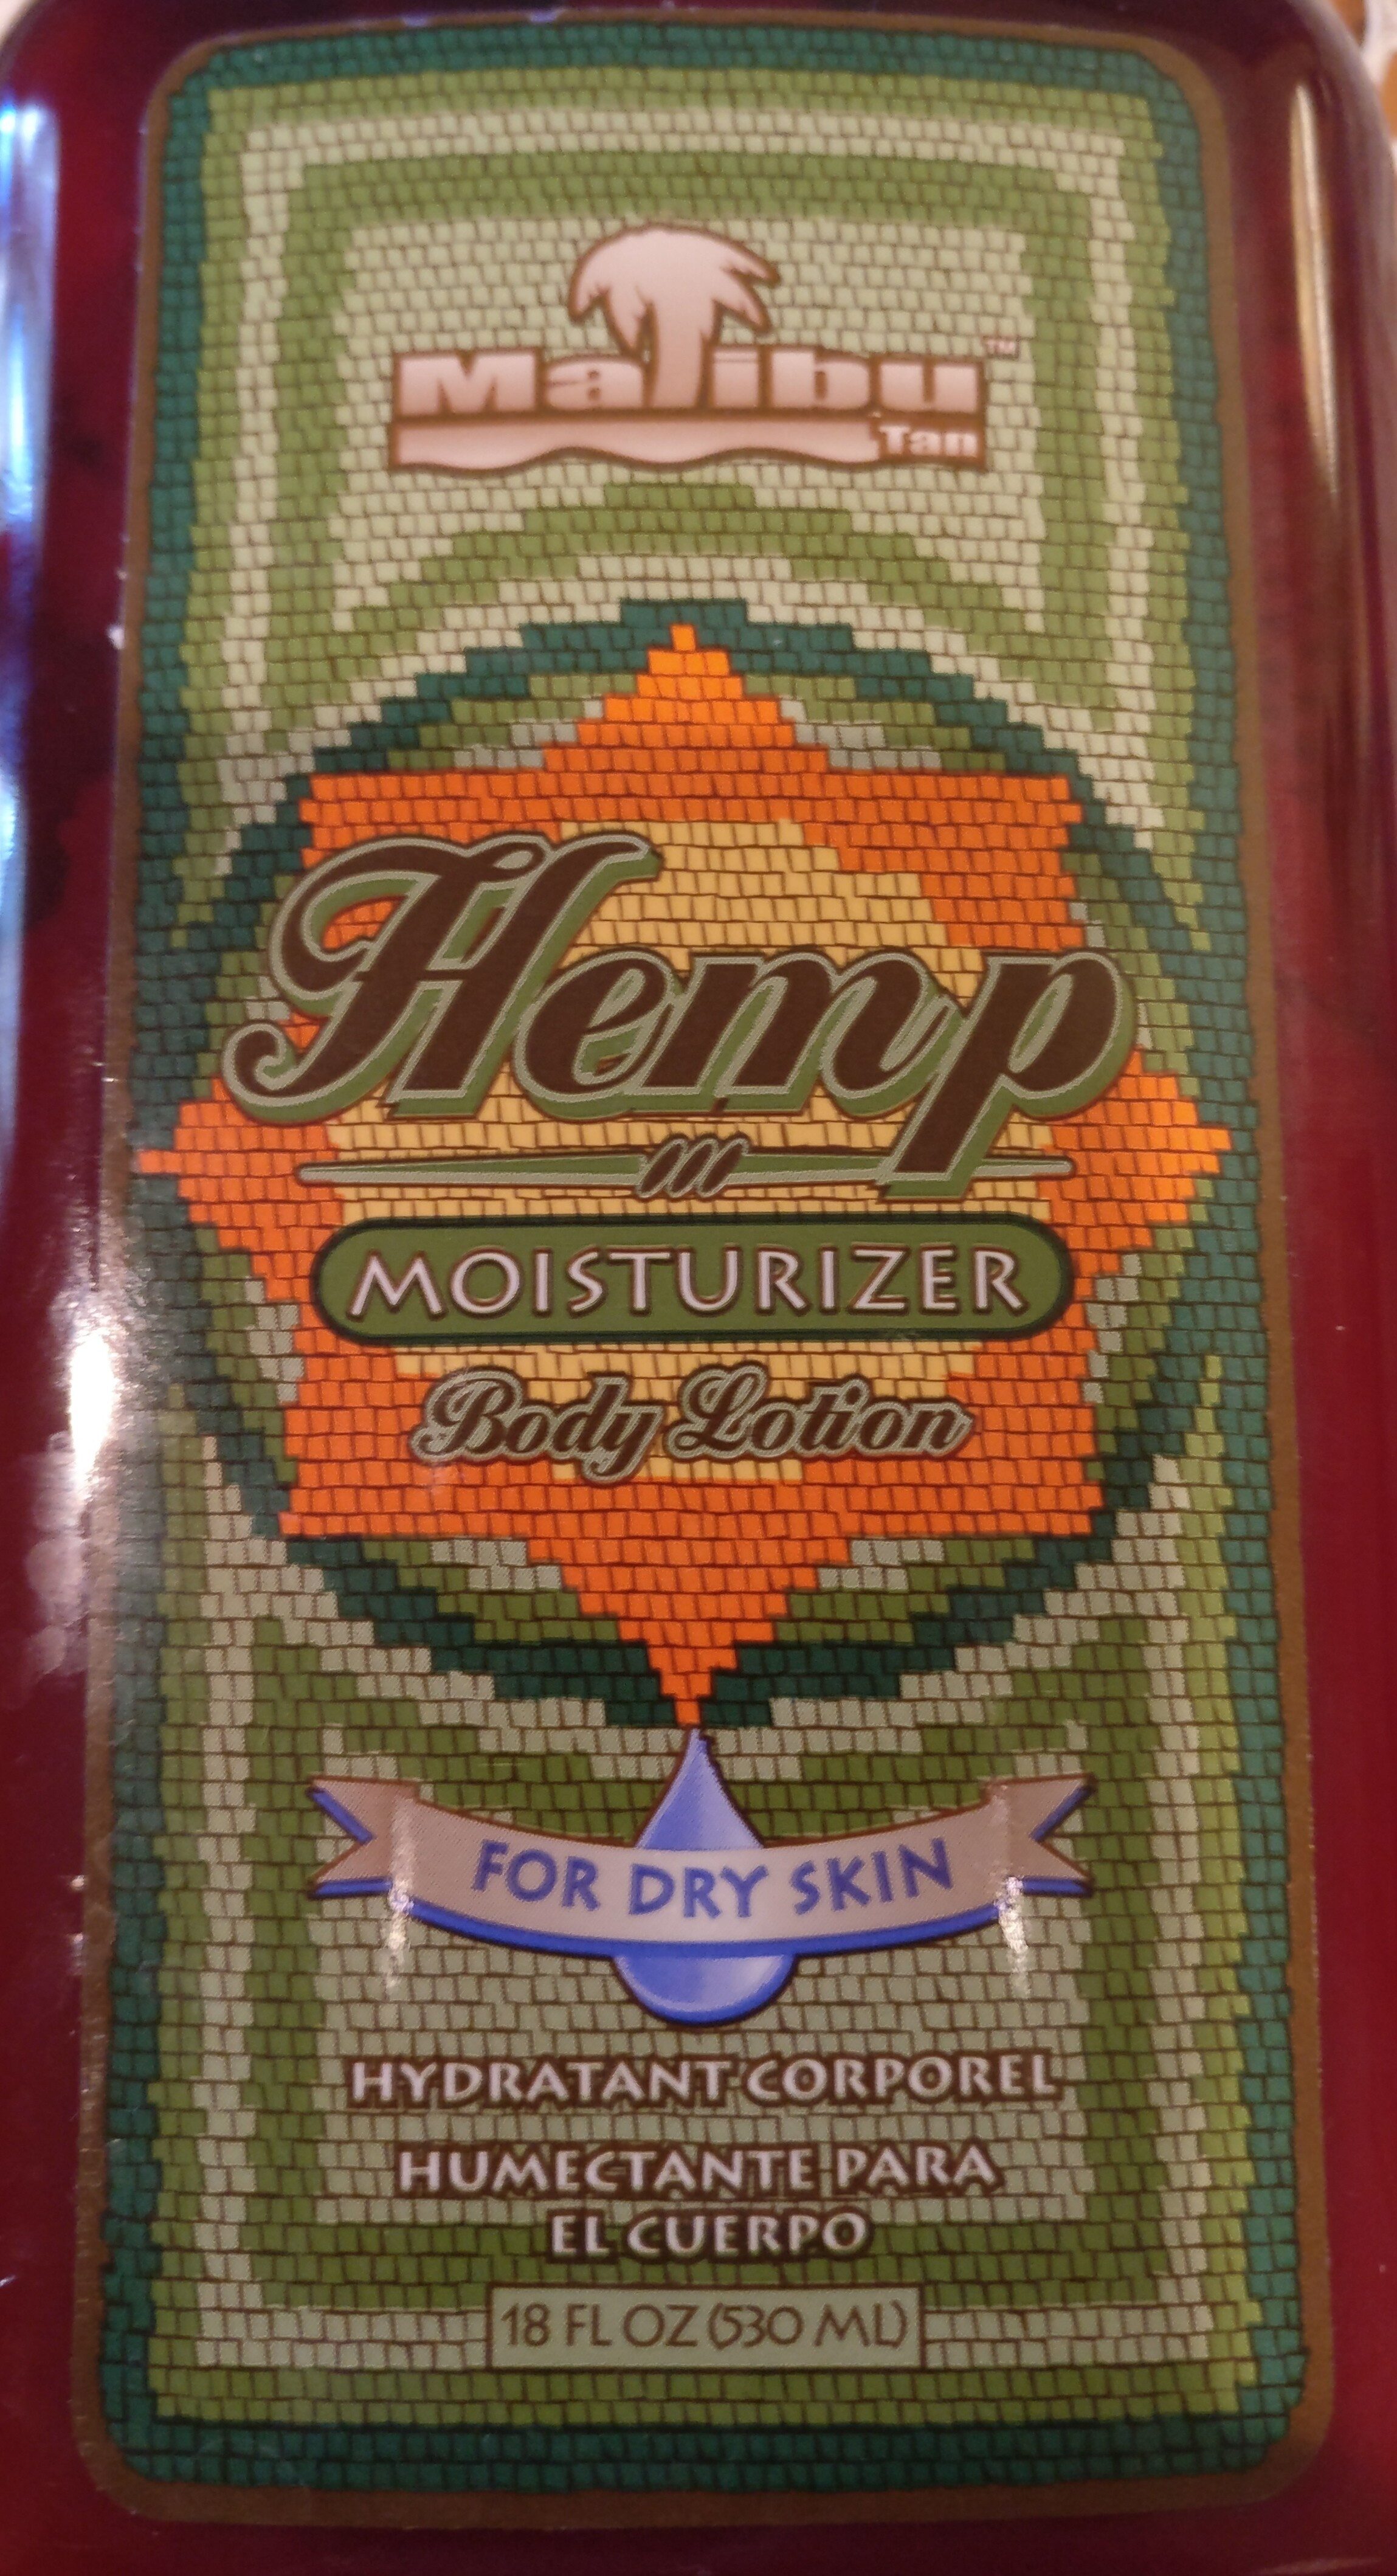 malibu tan hemp moisturizer - Produkt - en